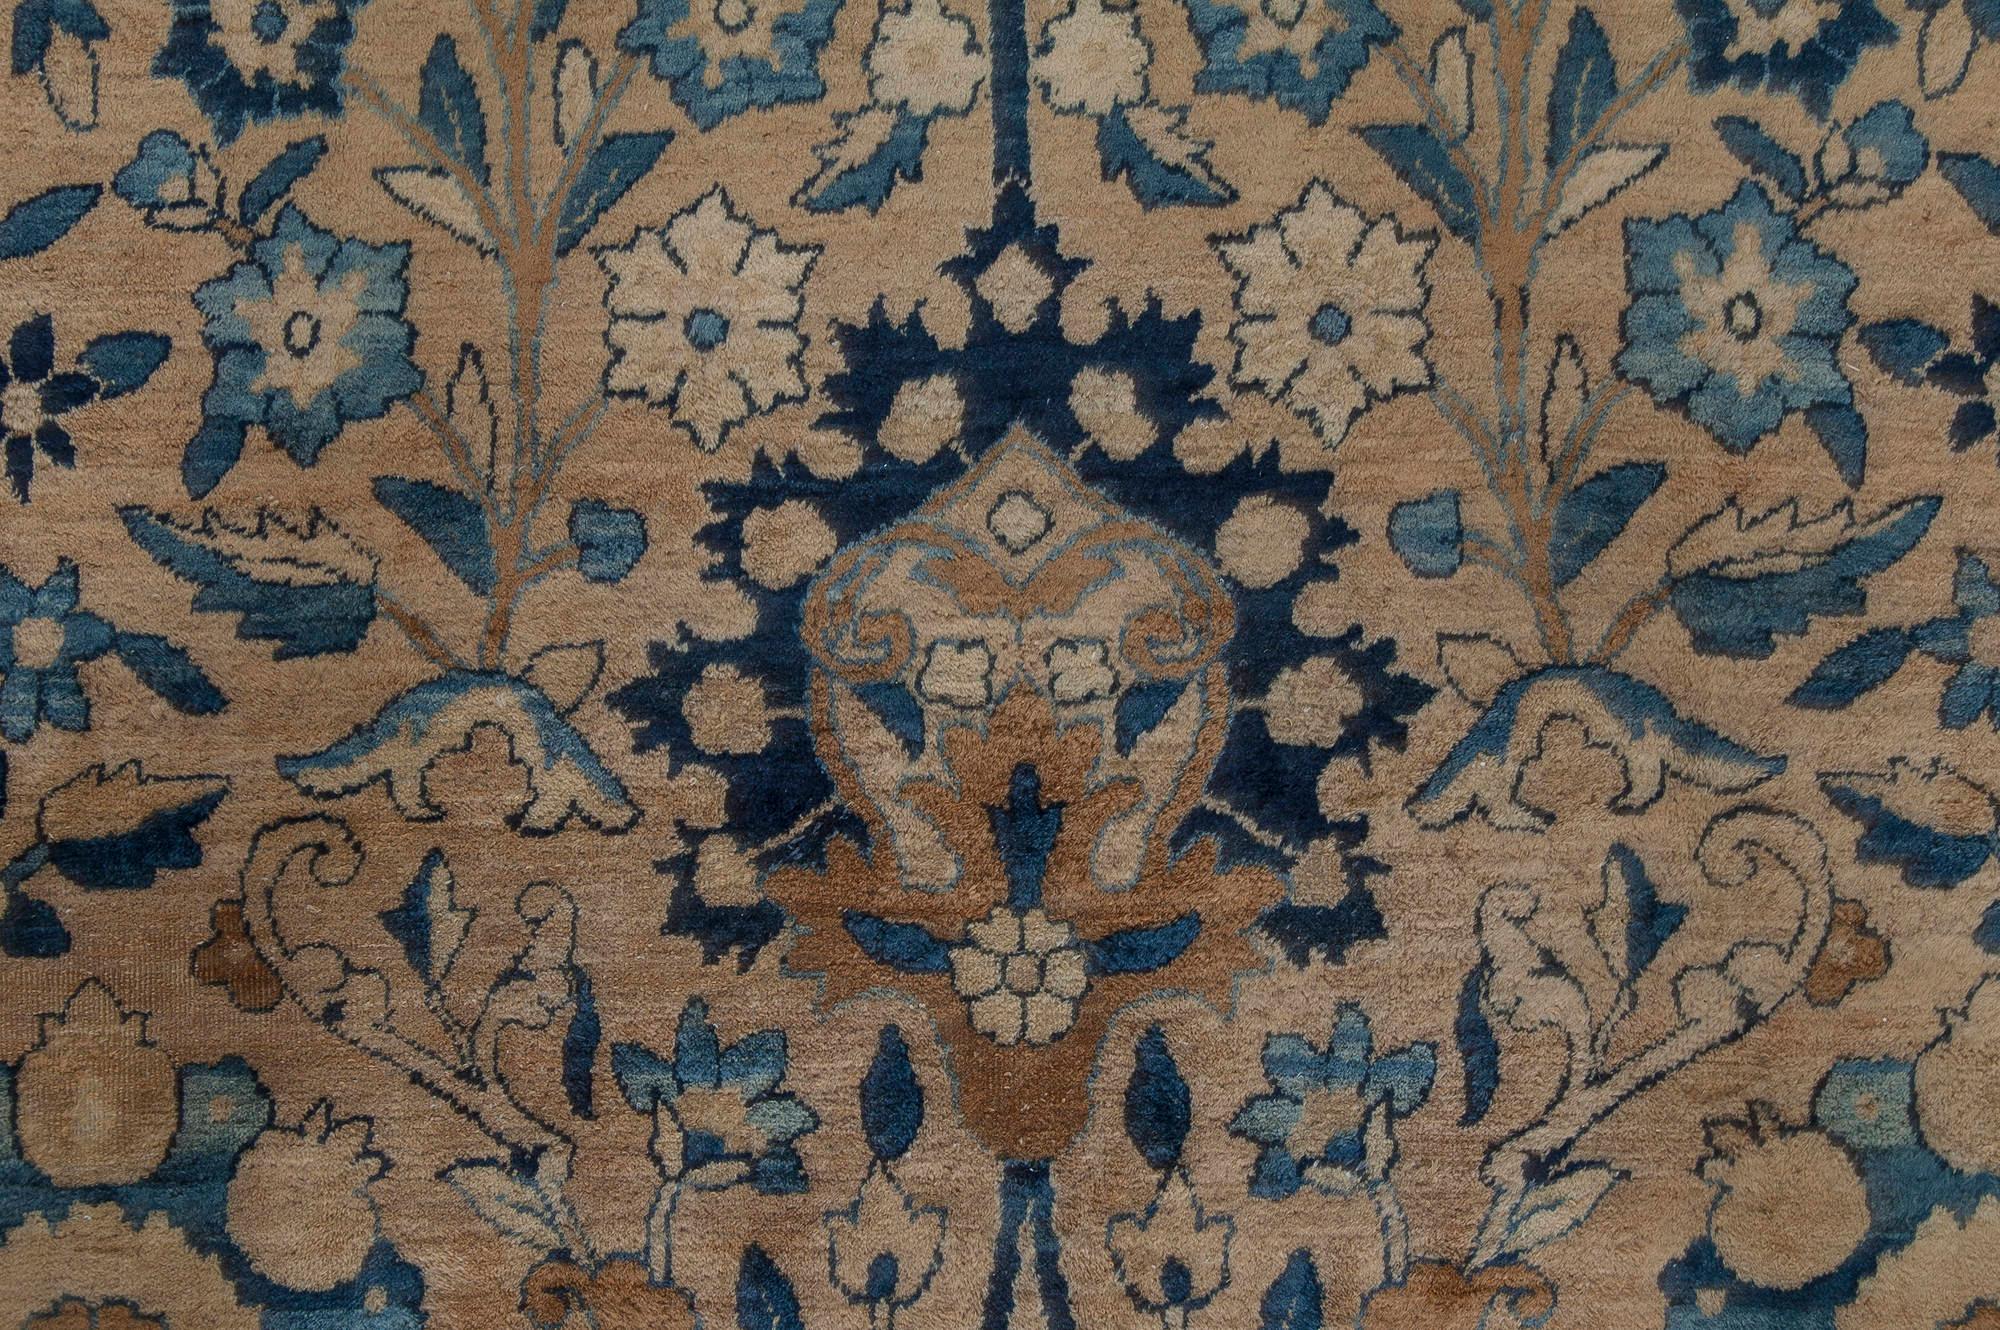 Antique Persian Kirman carpet
Size: 13'5